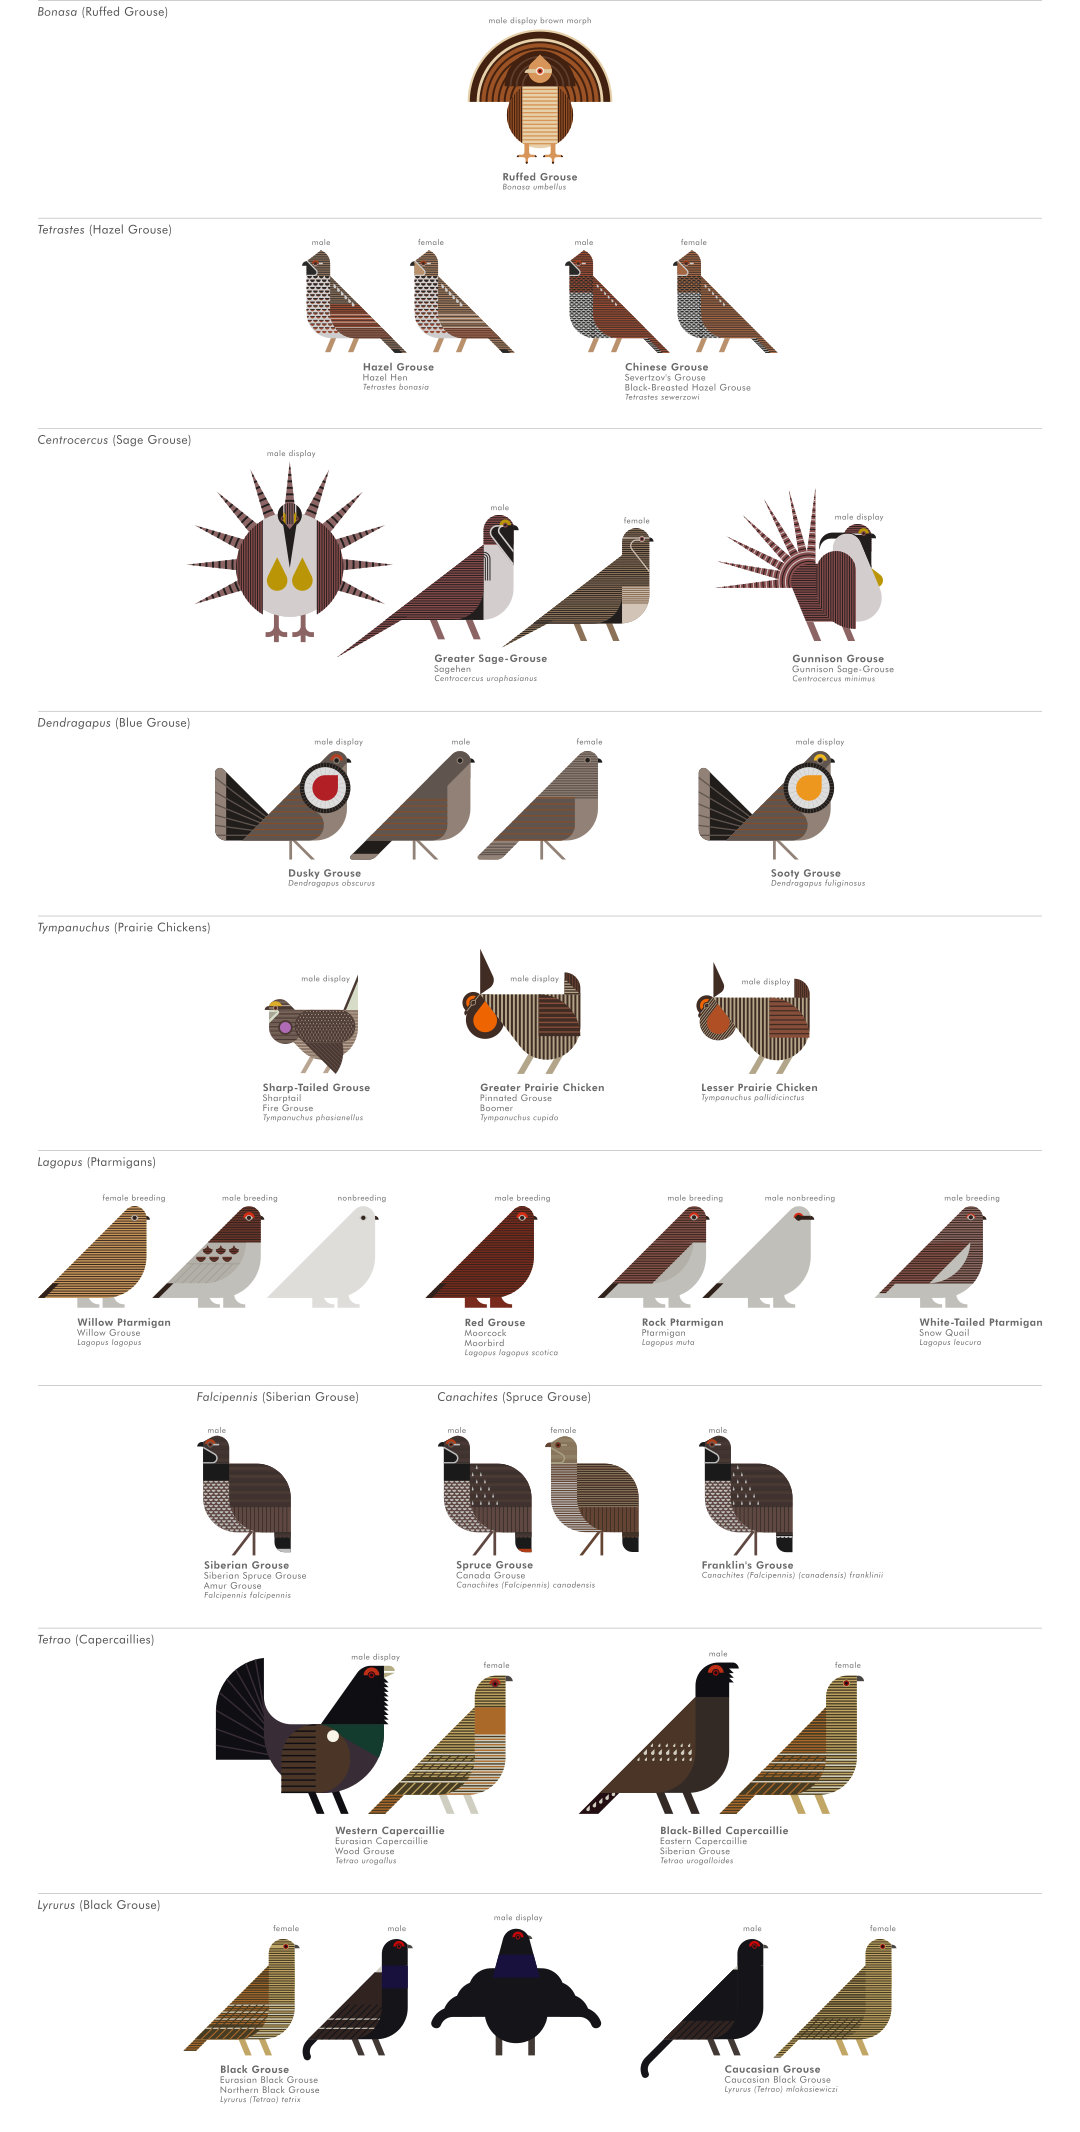 scott partridge - ave - avian vector encyclopedia - grouse - quail - bird vector art